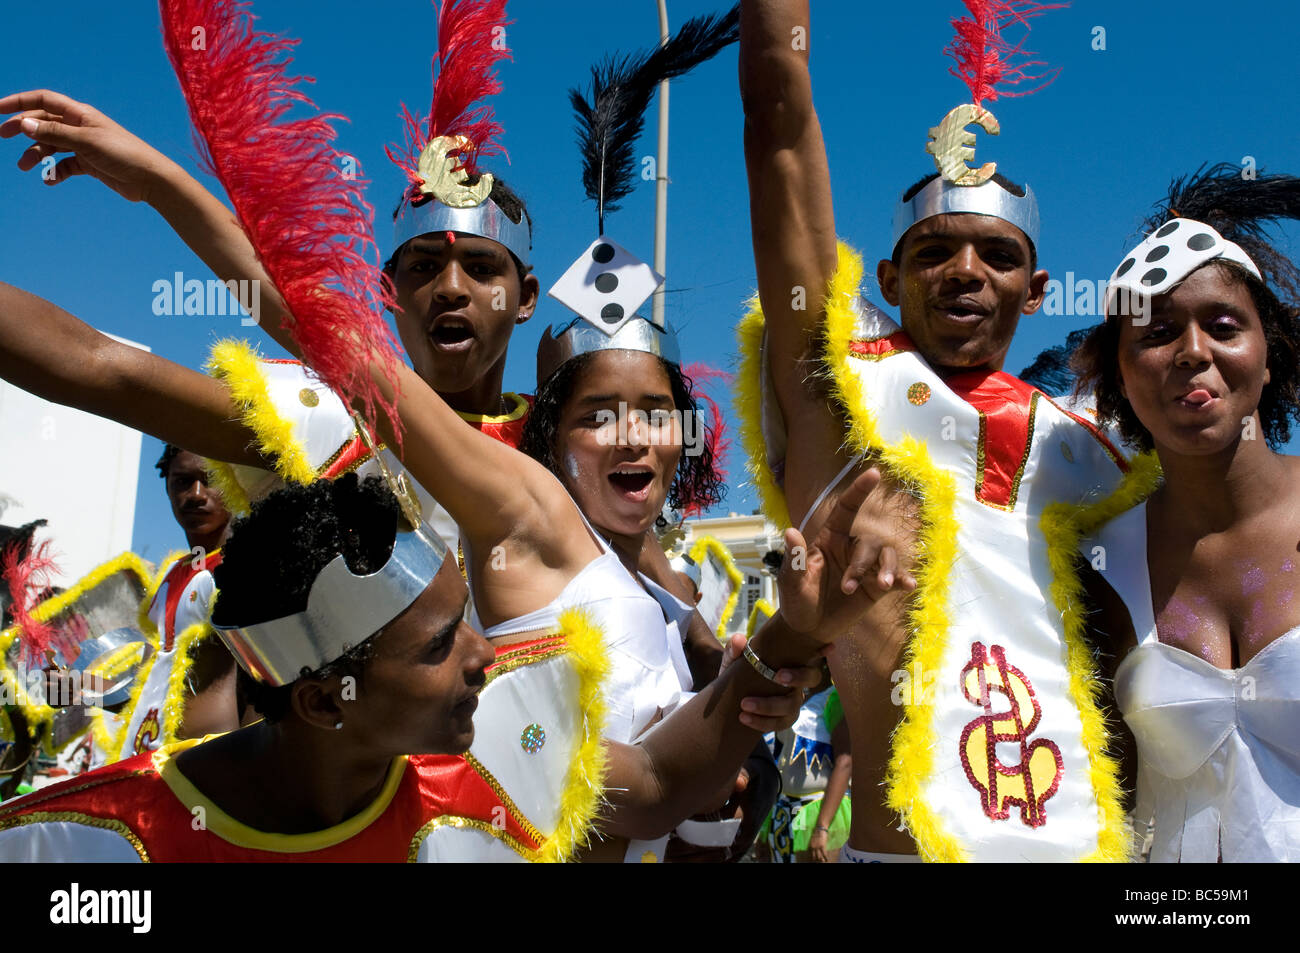 Costumed people celebrating Carnival Mindelo Cabo Verde Africa Stock Photo